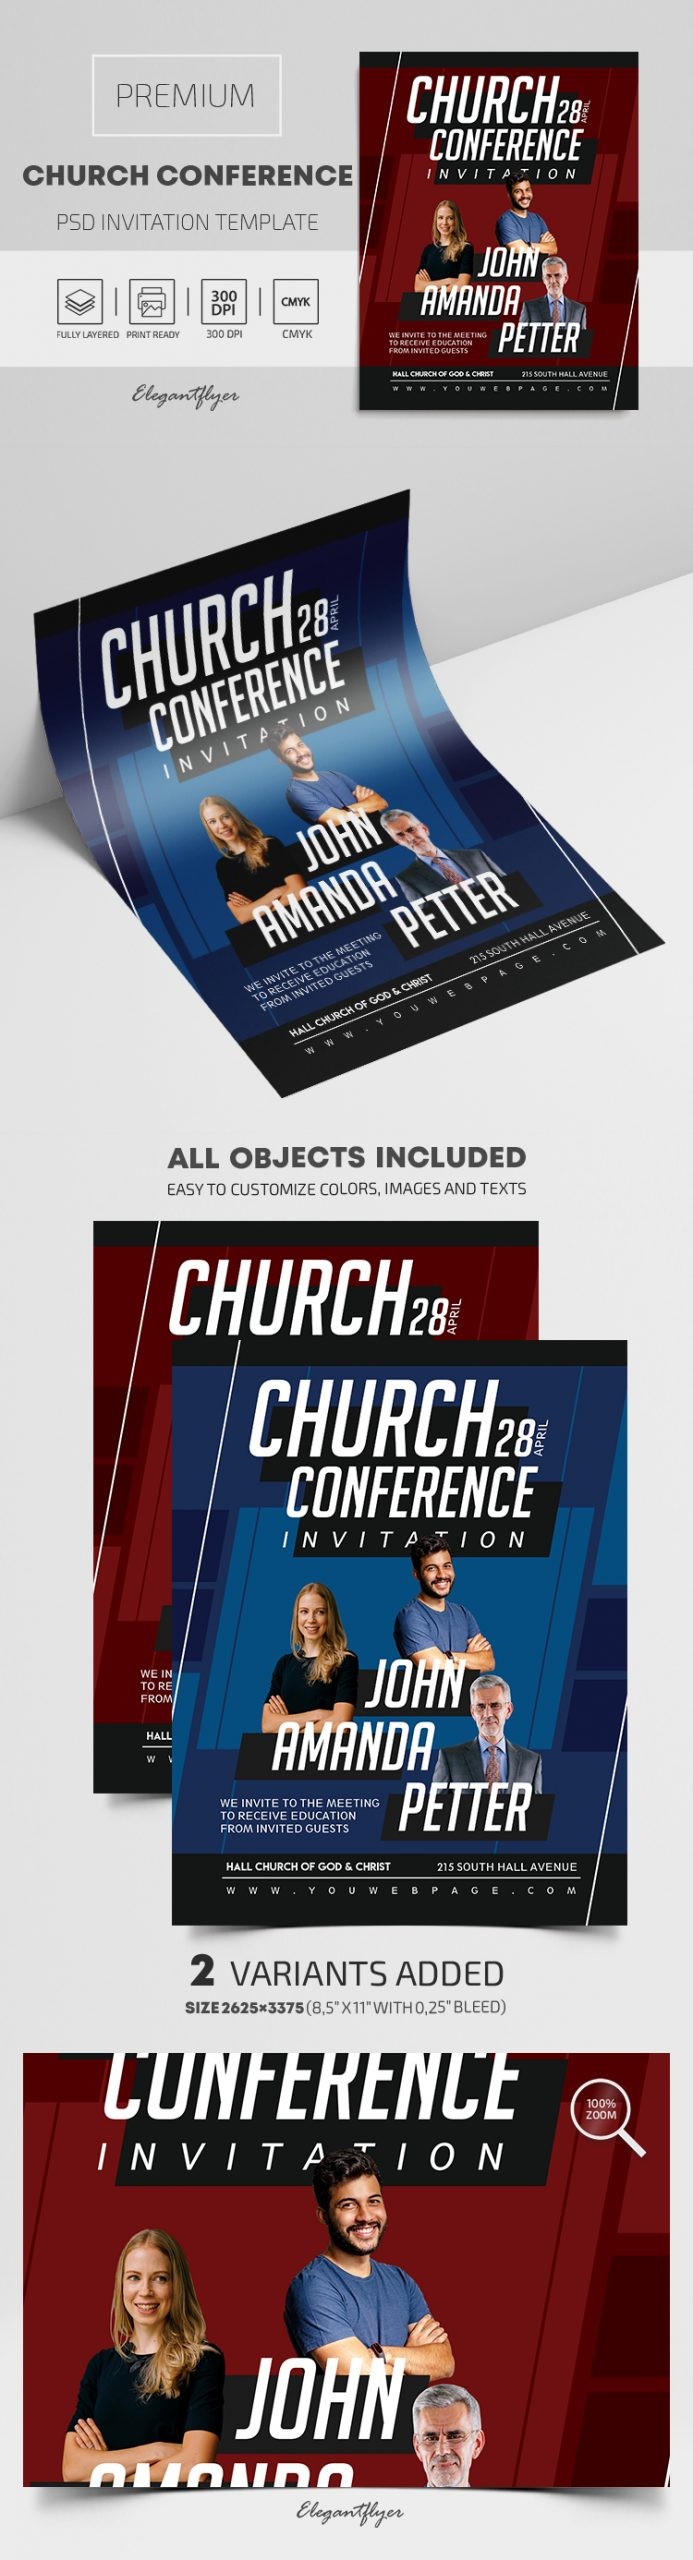 Church Conference Invitation by ElegantFlyer